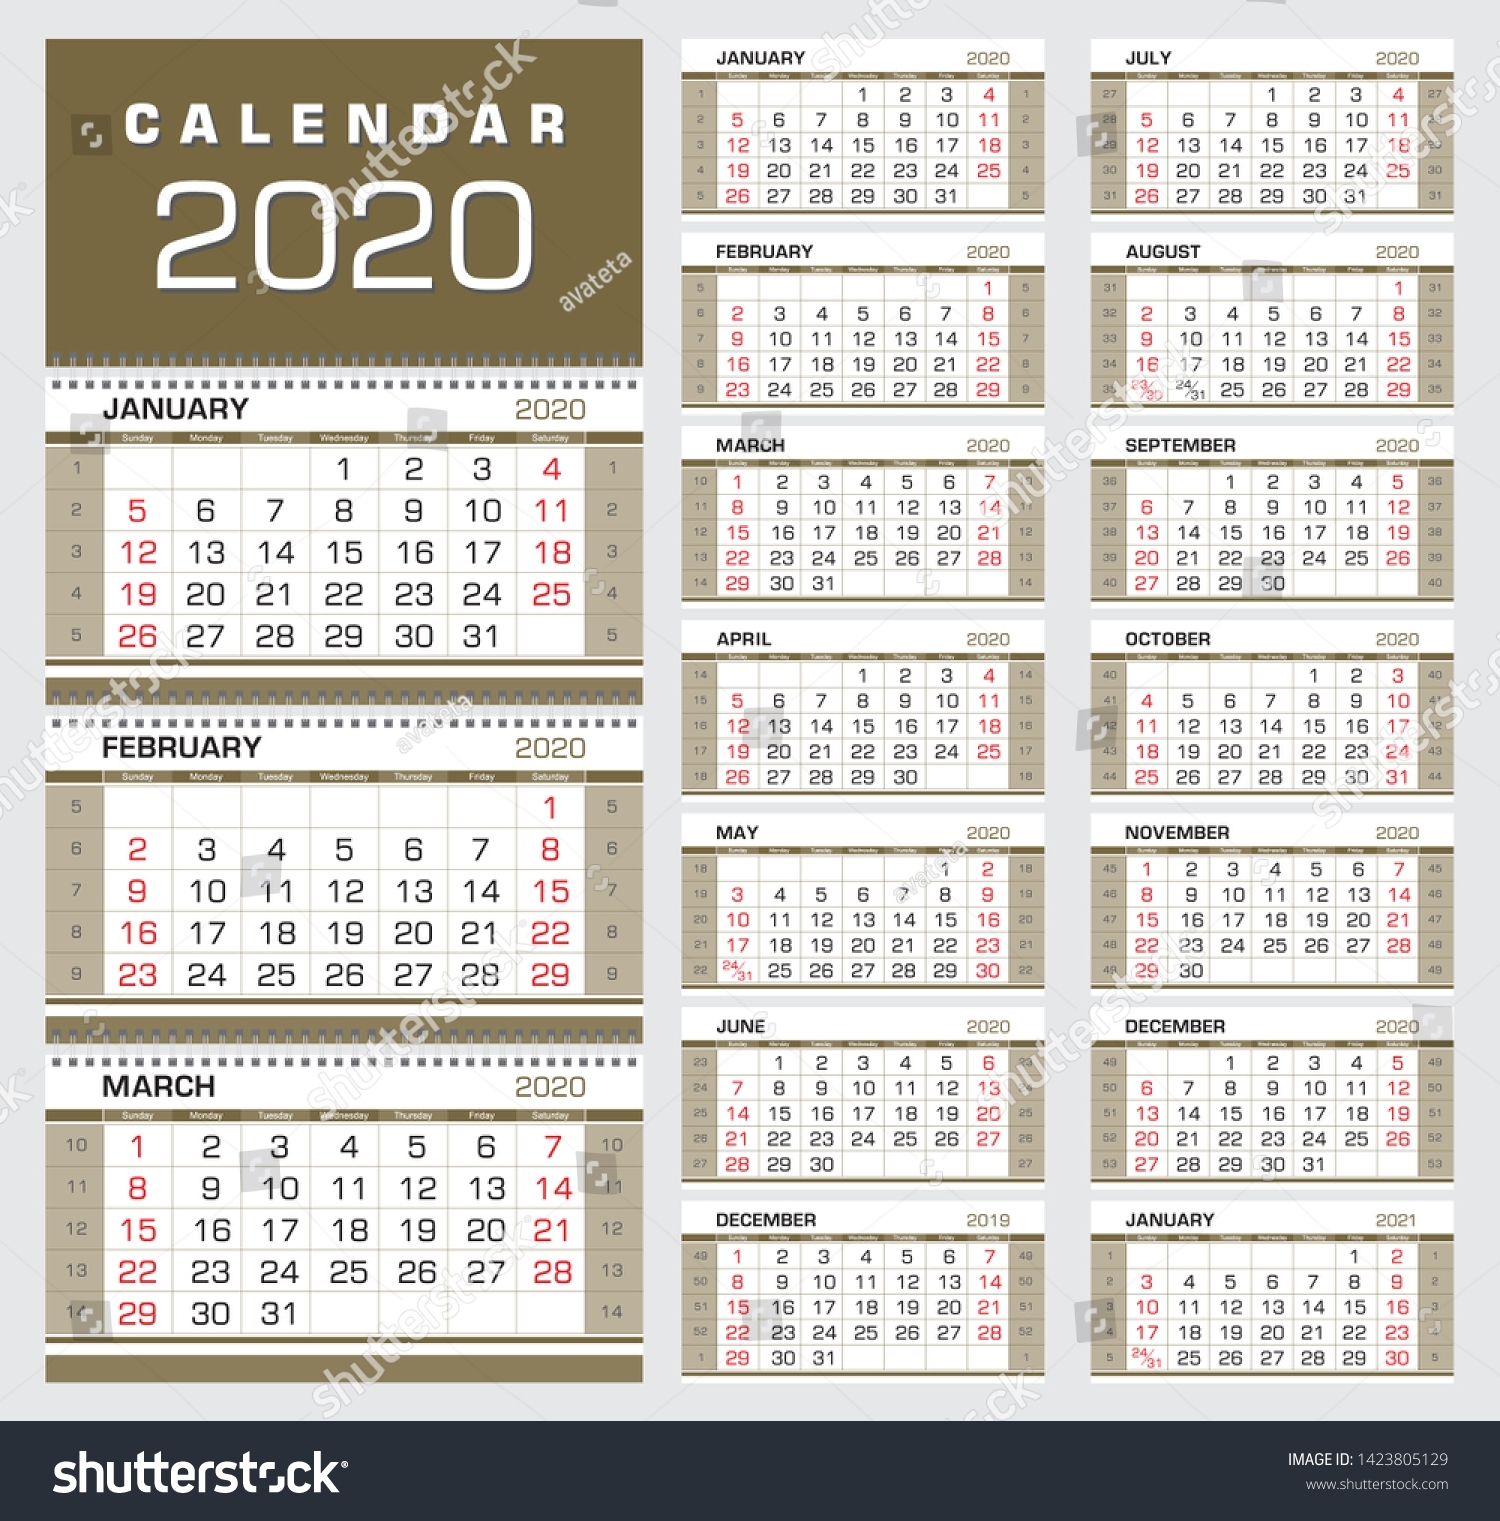 Gold Wall Quarter Calendar 2020 Week Stock Image | Download Now